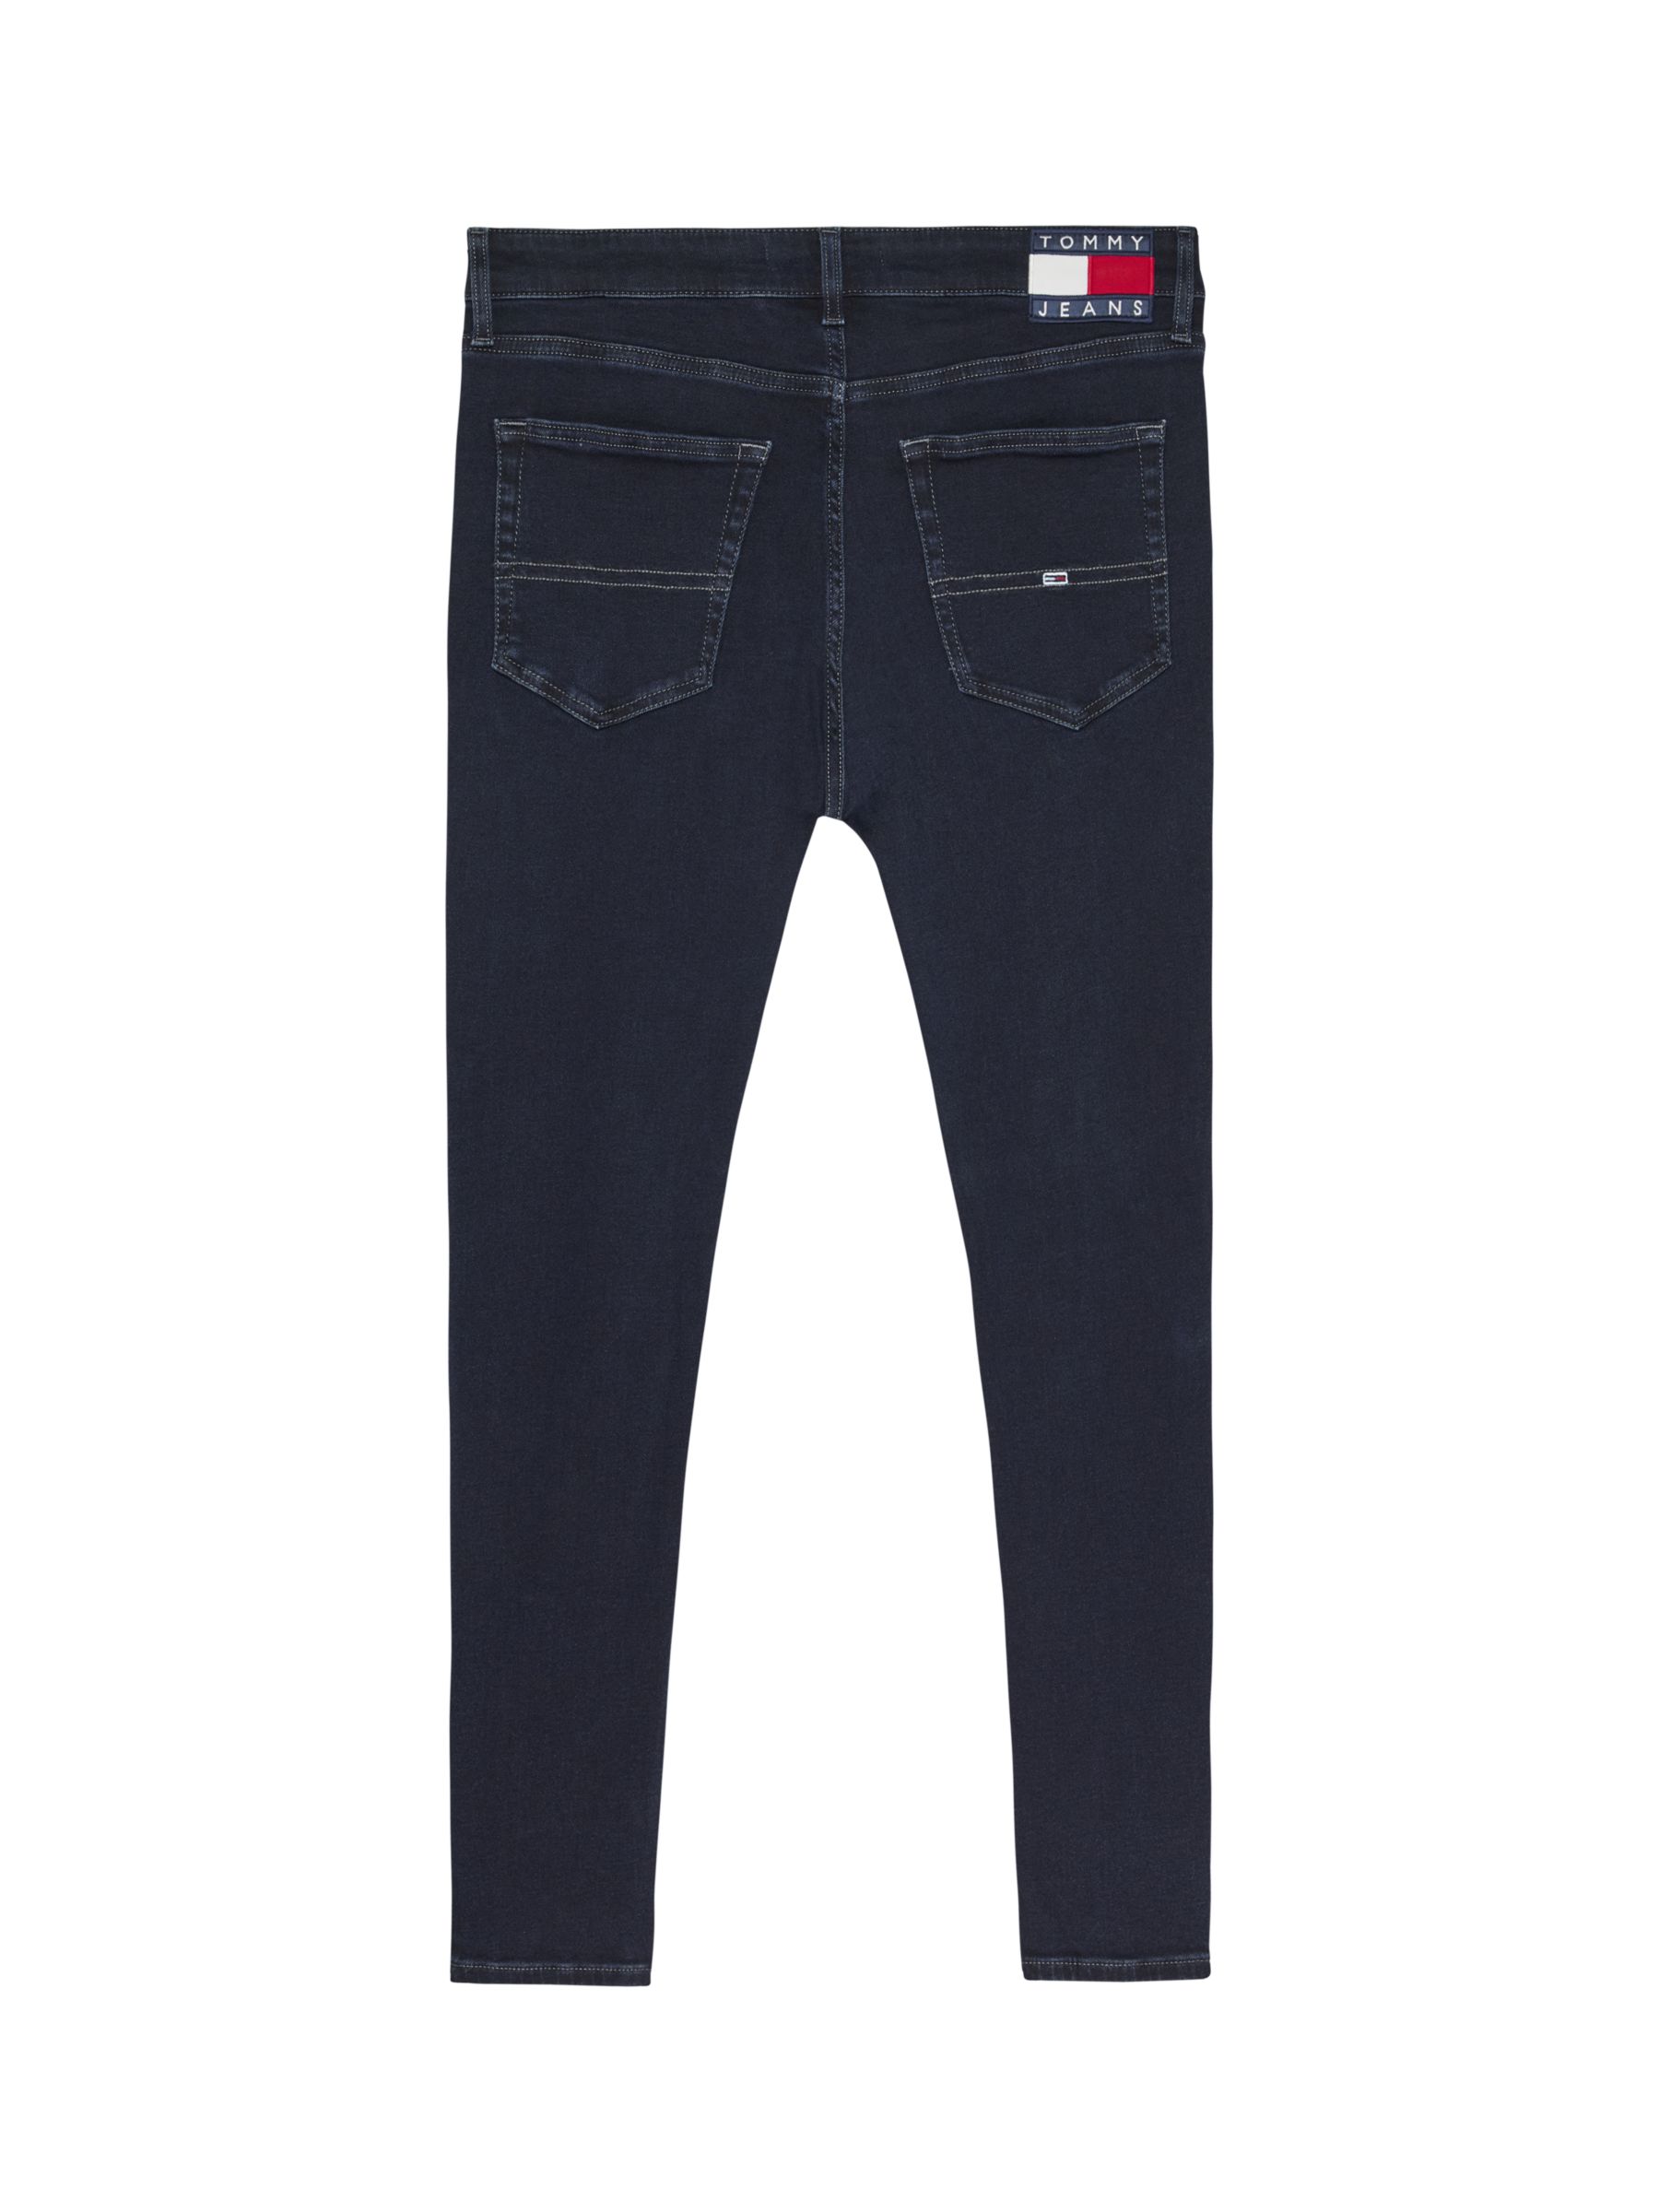 Tommy Jeans Skinny Fit Finley Jeans, Denim Black, 32S